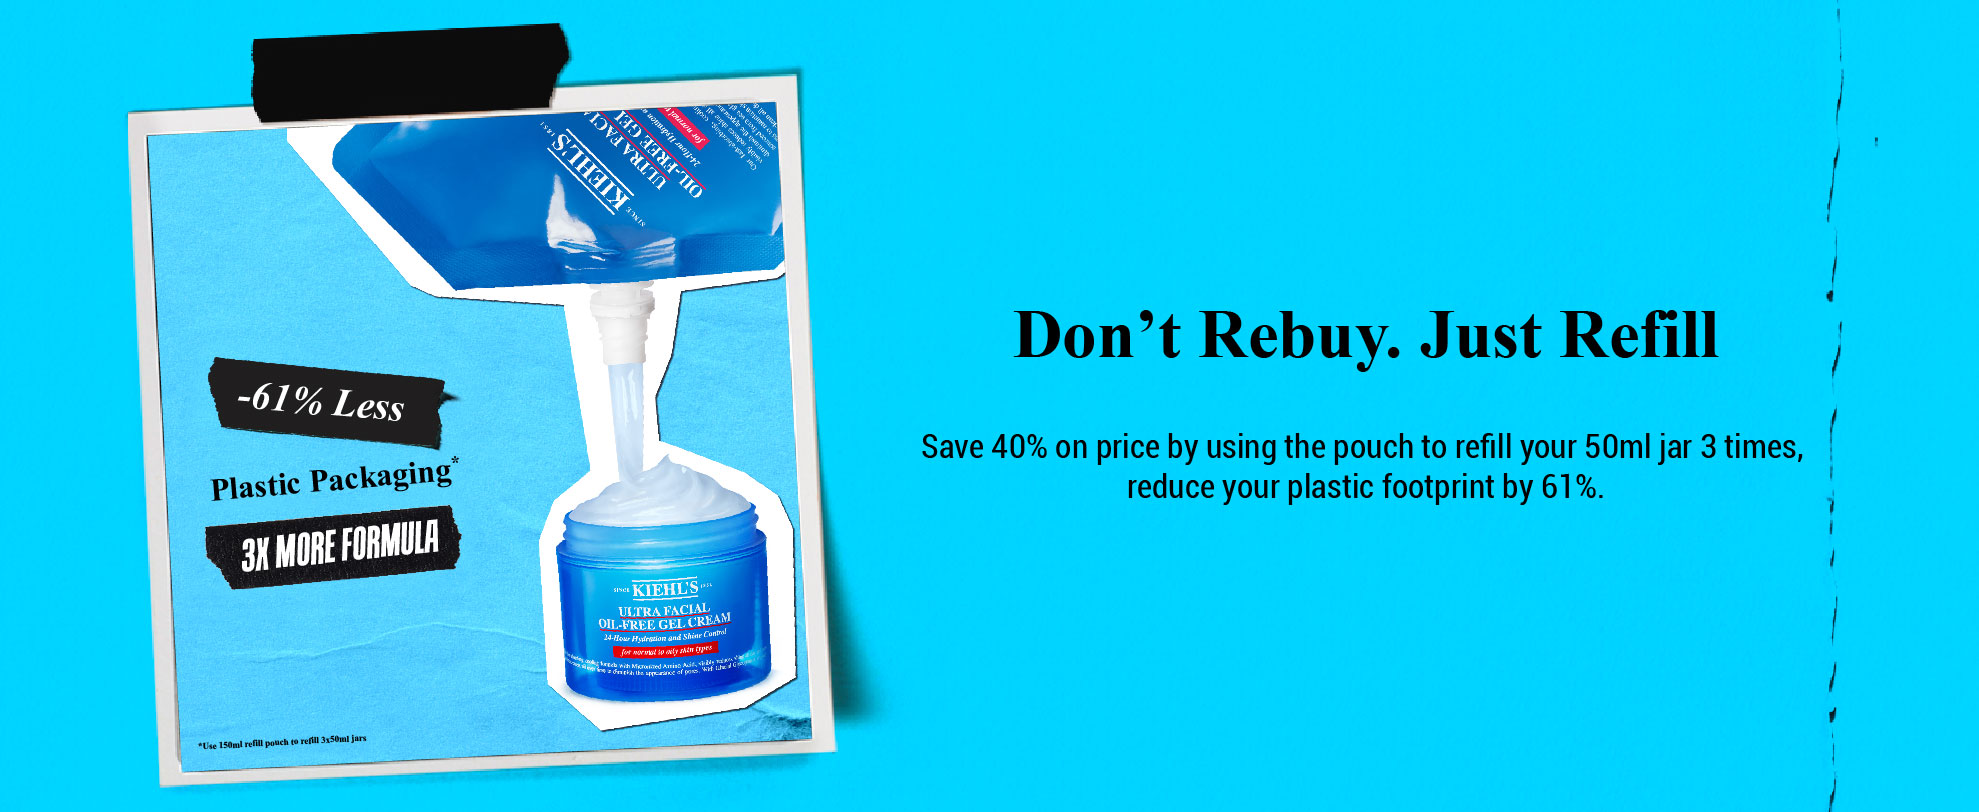 Ultra Facial Cream Refillable - Save 61% plastic usage